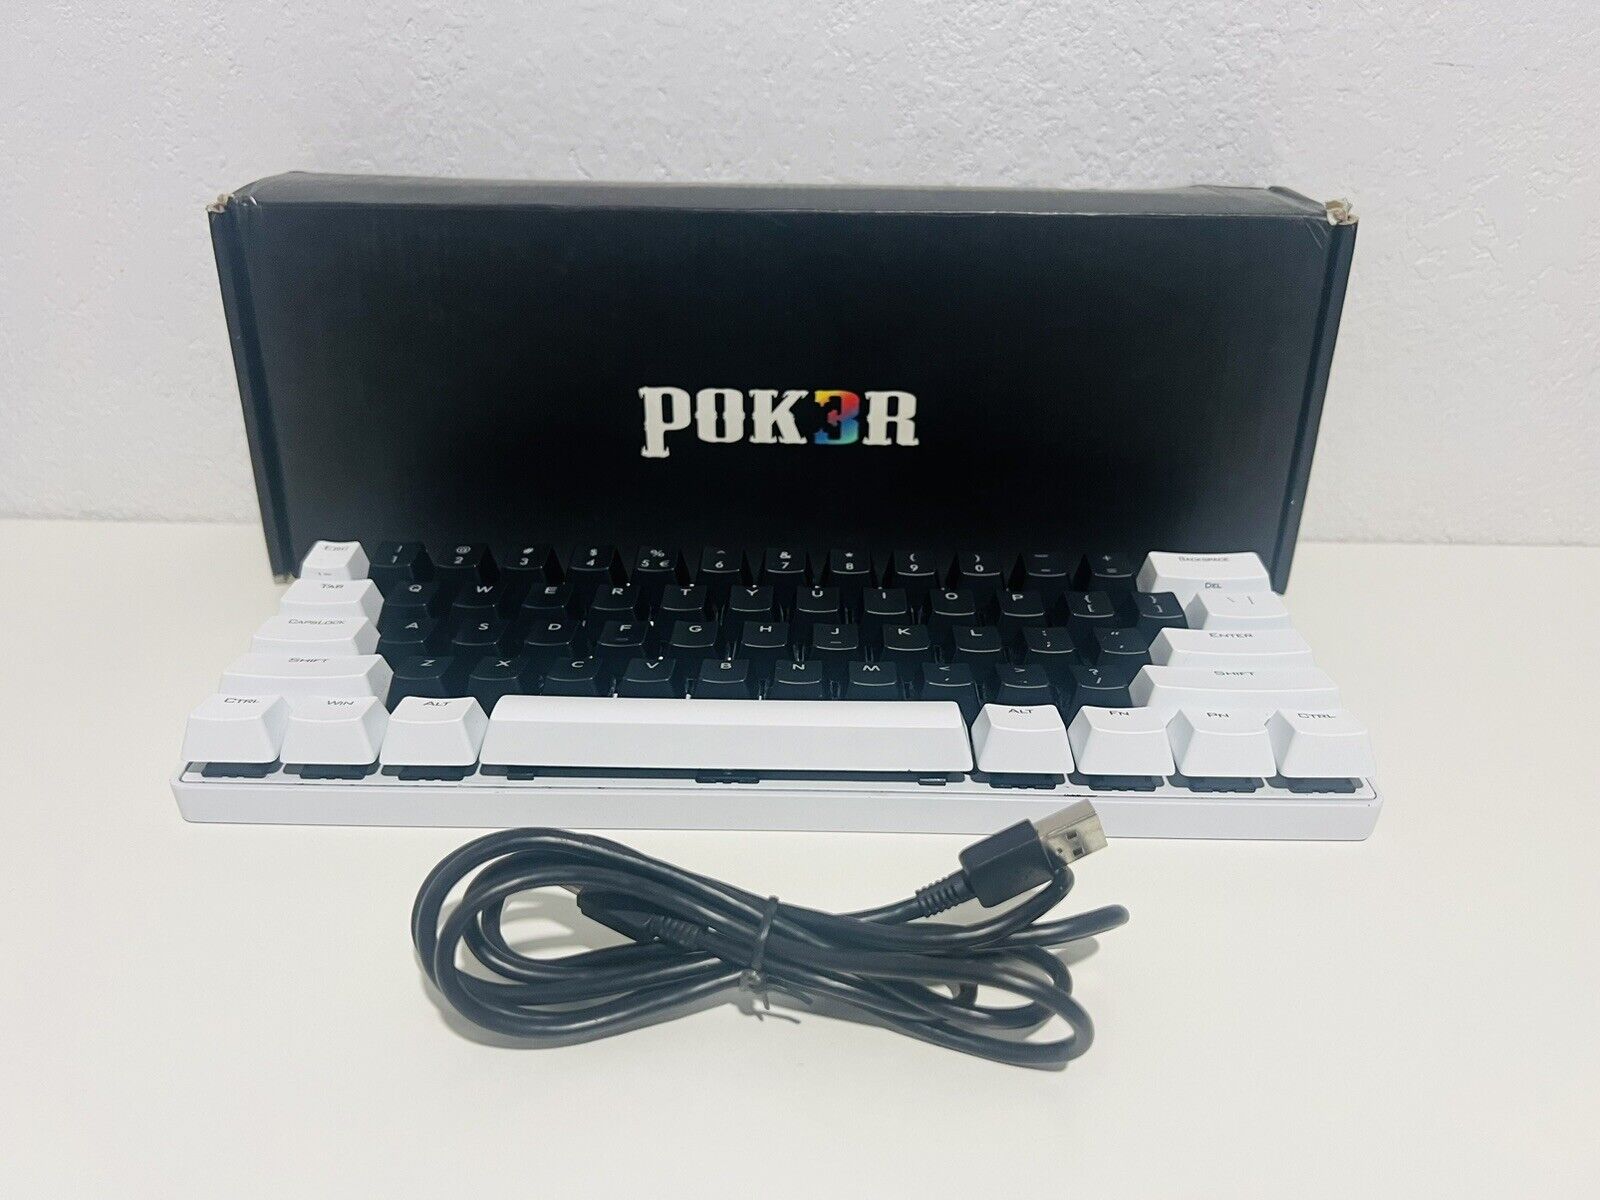 Vortex Pok3r VTG-6100 RGB Keyboard